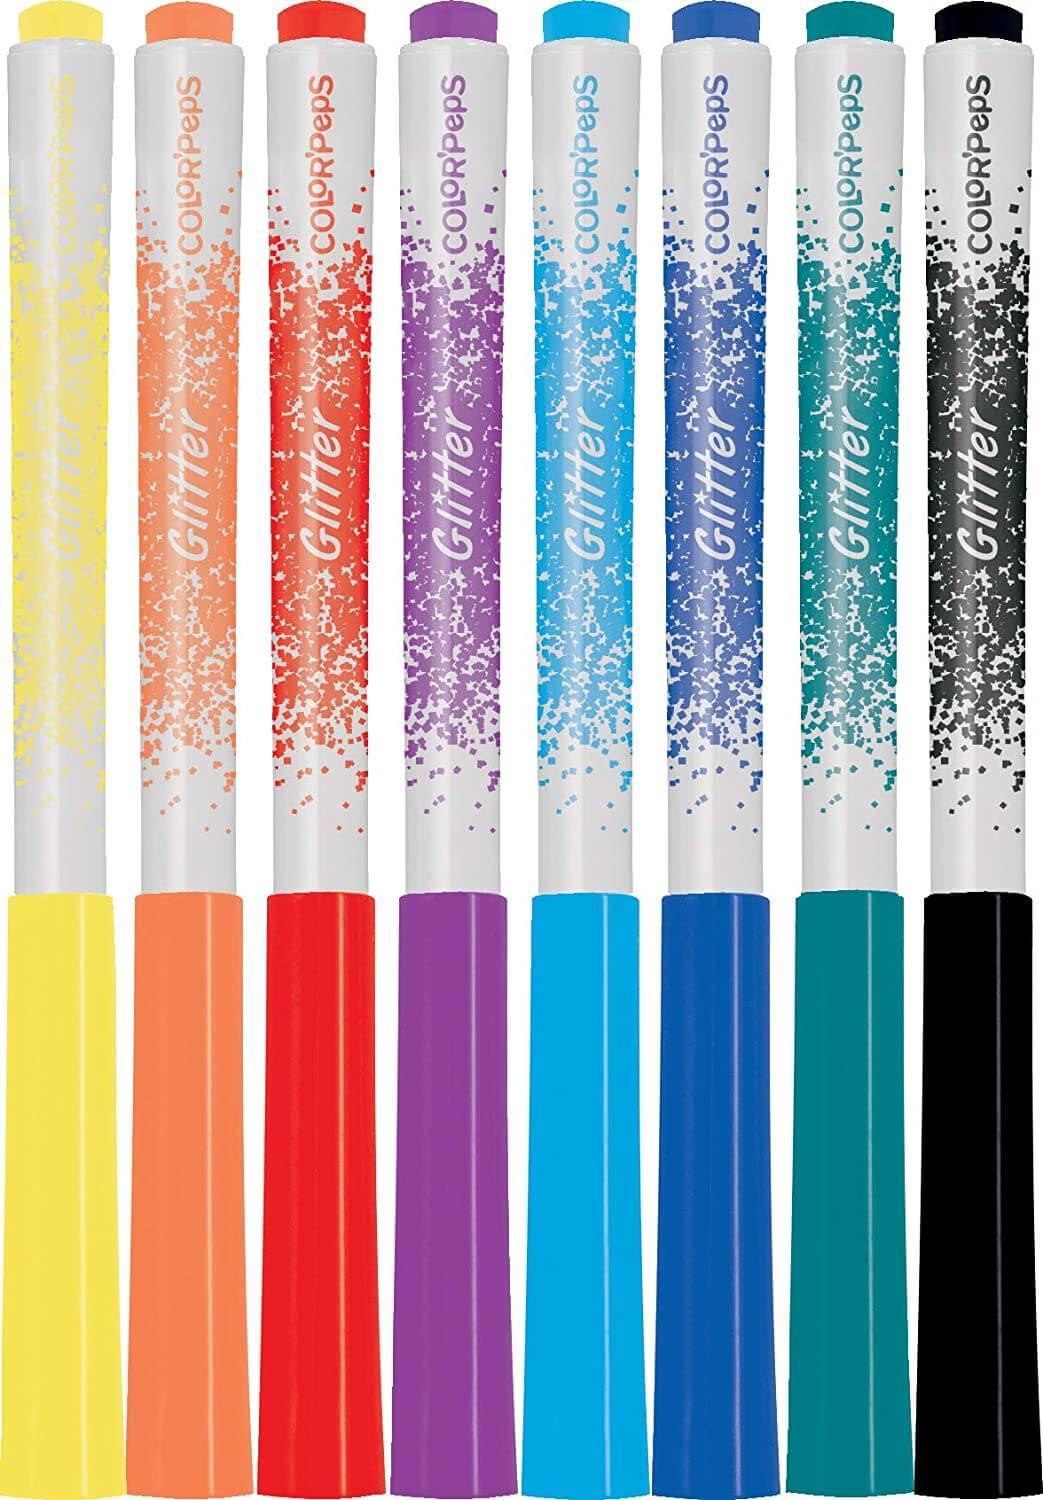 Maped Colour'Peps Glitter Felt Pens x 8